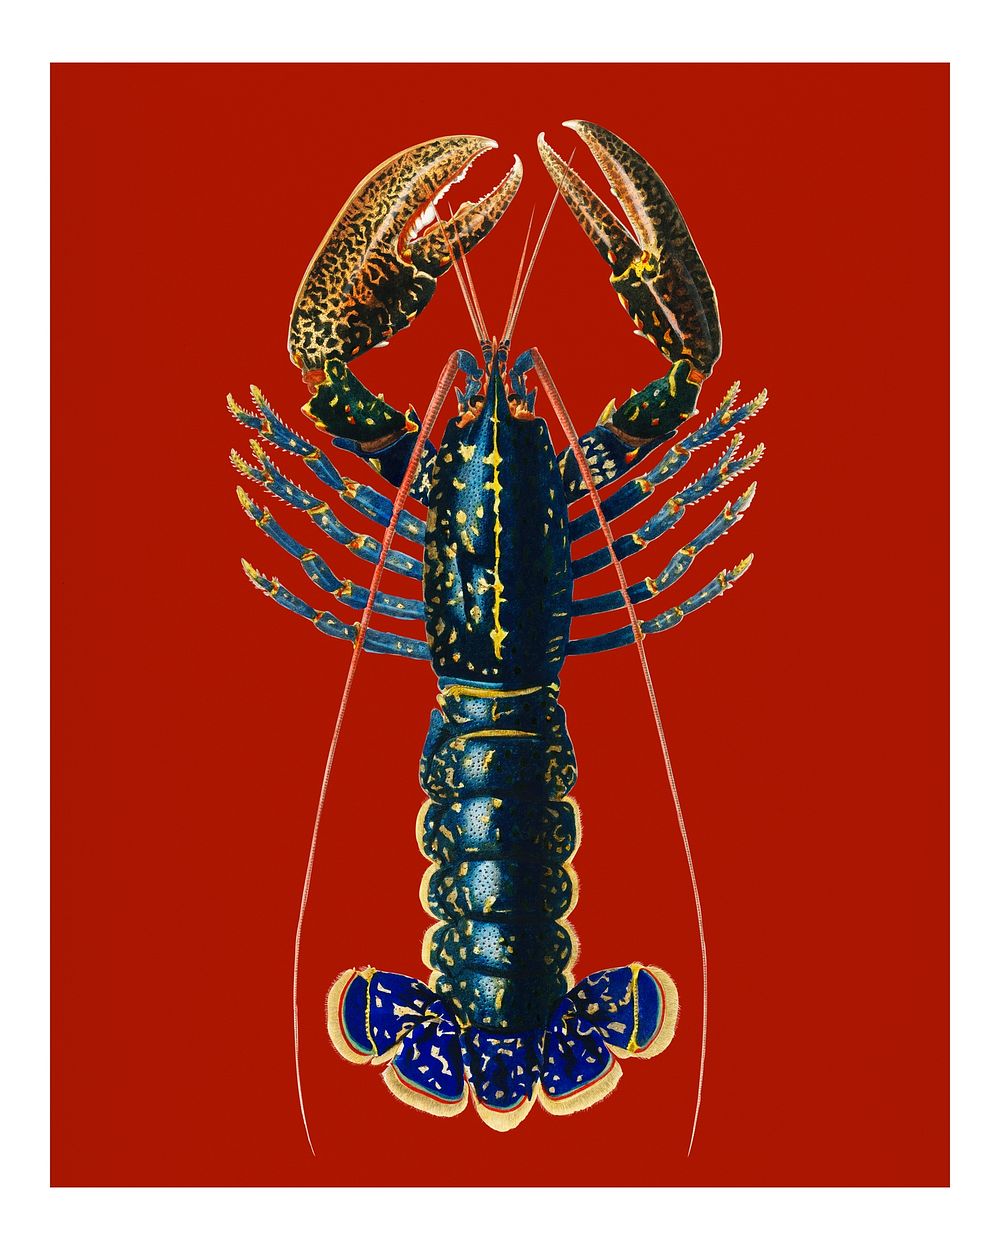 Vintage Crimson Crawfish (Palemon Ornatum) illustration wall art print and poster.